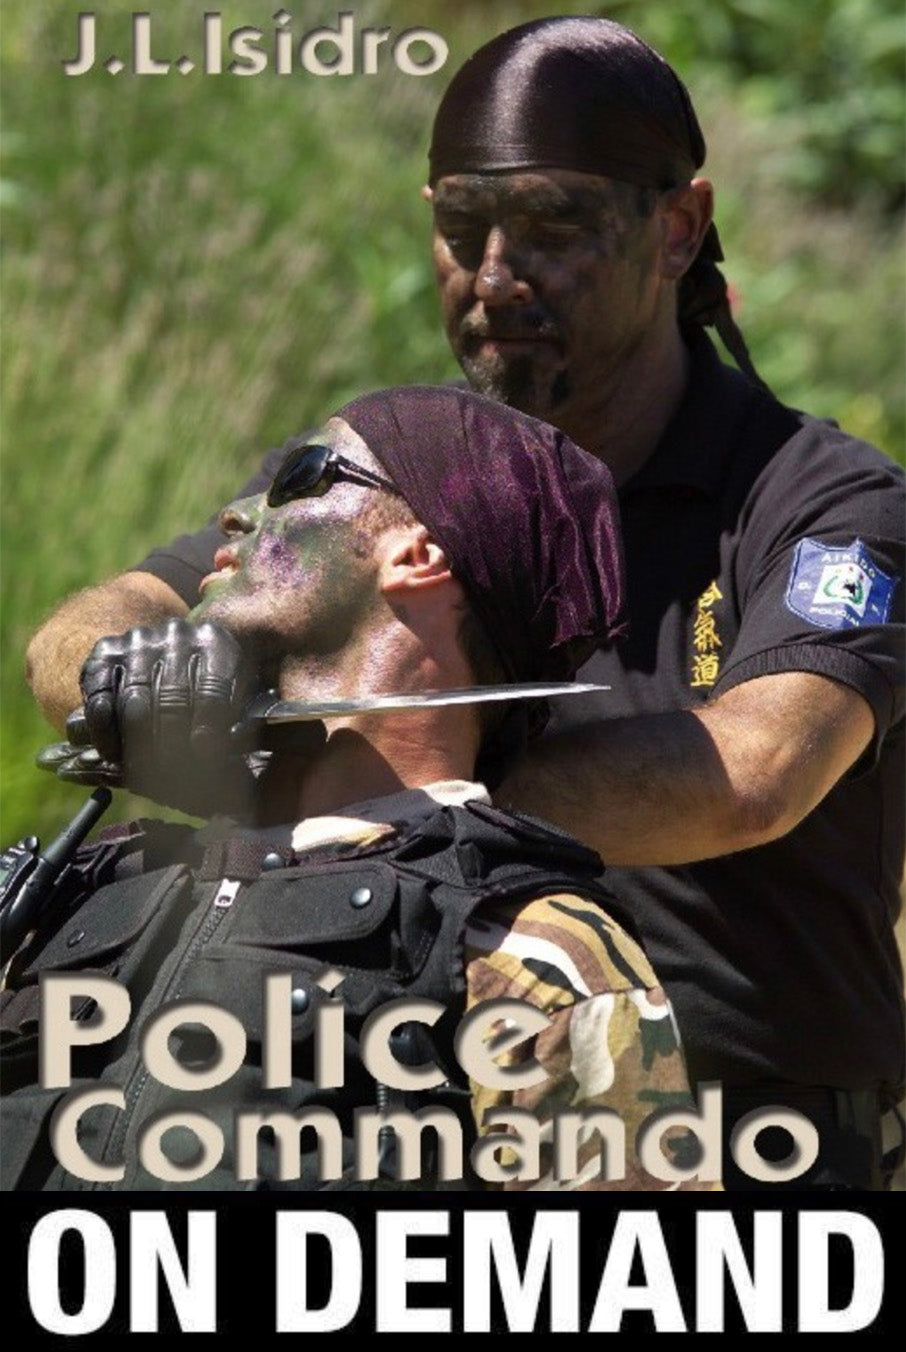 Police Commando with Jose Isidro (On Demand) - Budovideos